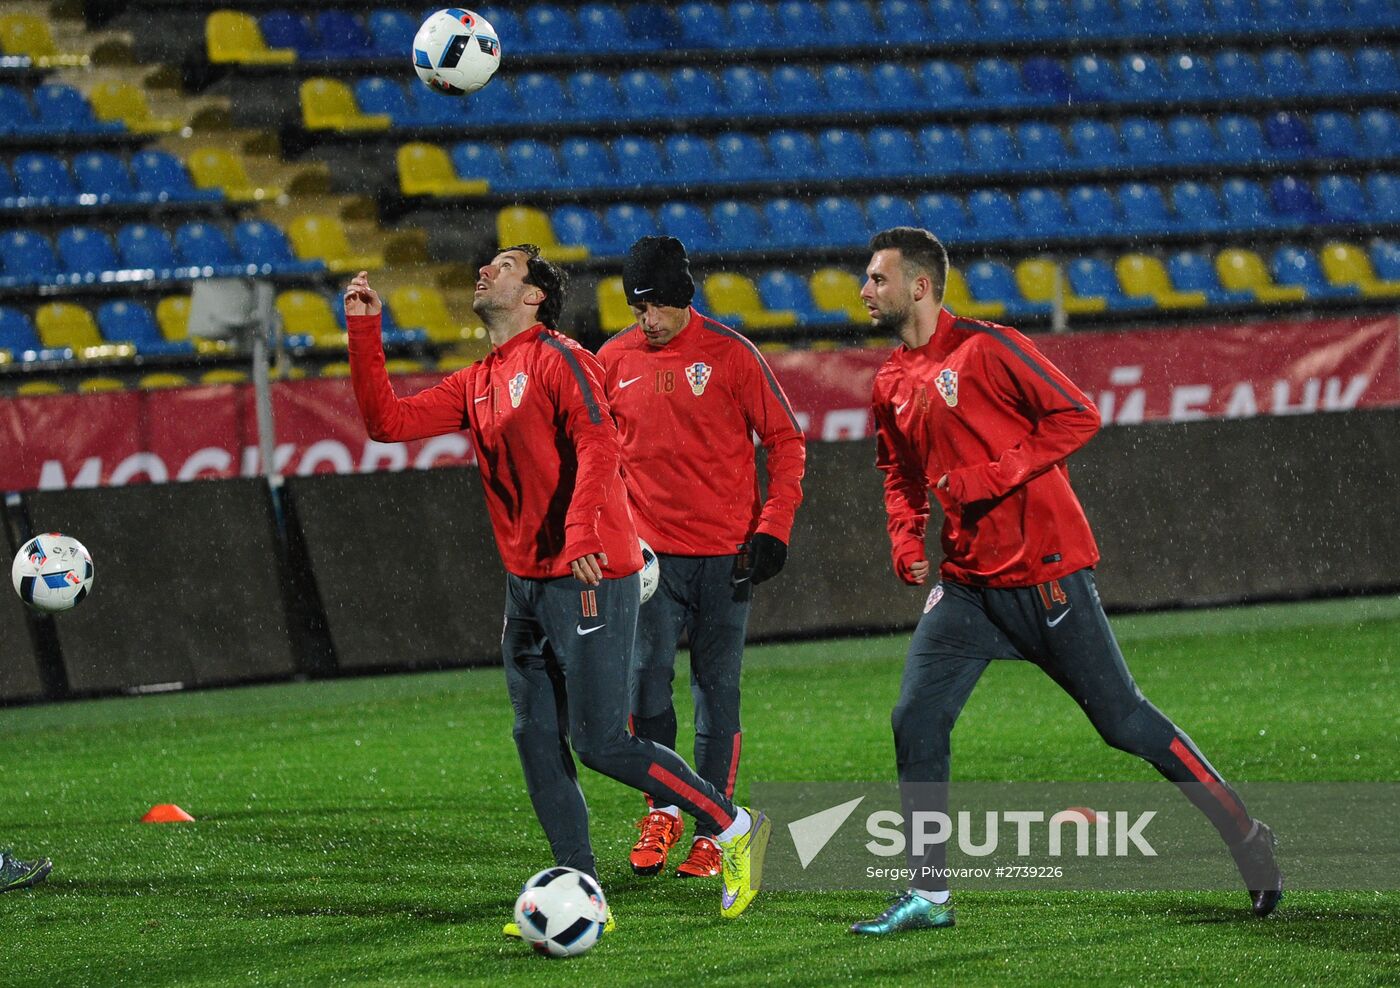 Croatia national football team's training session